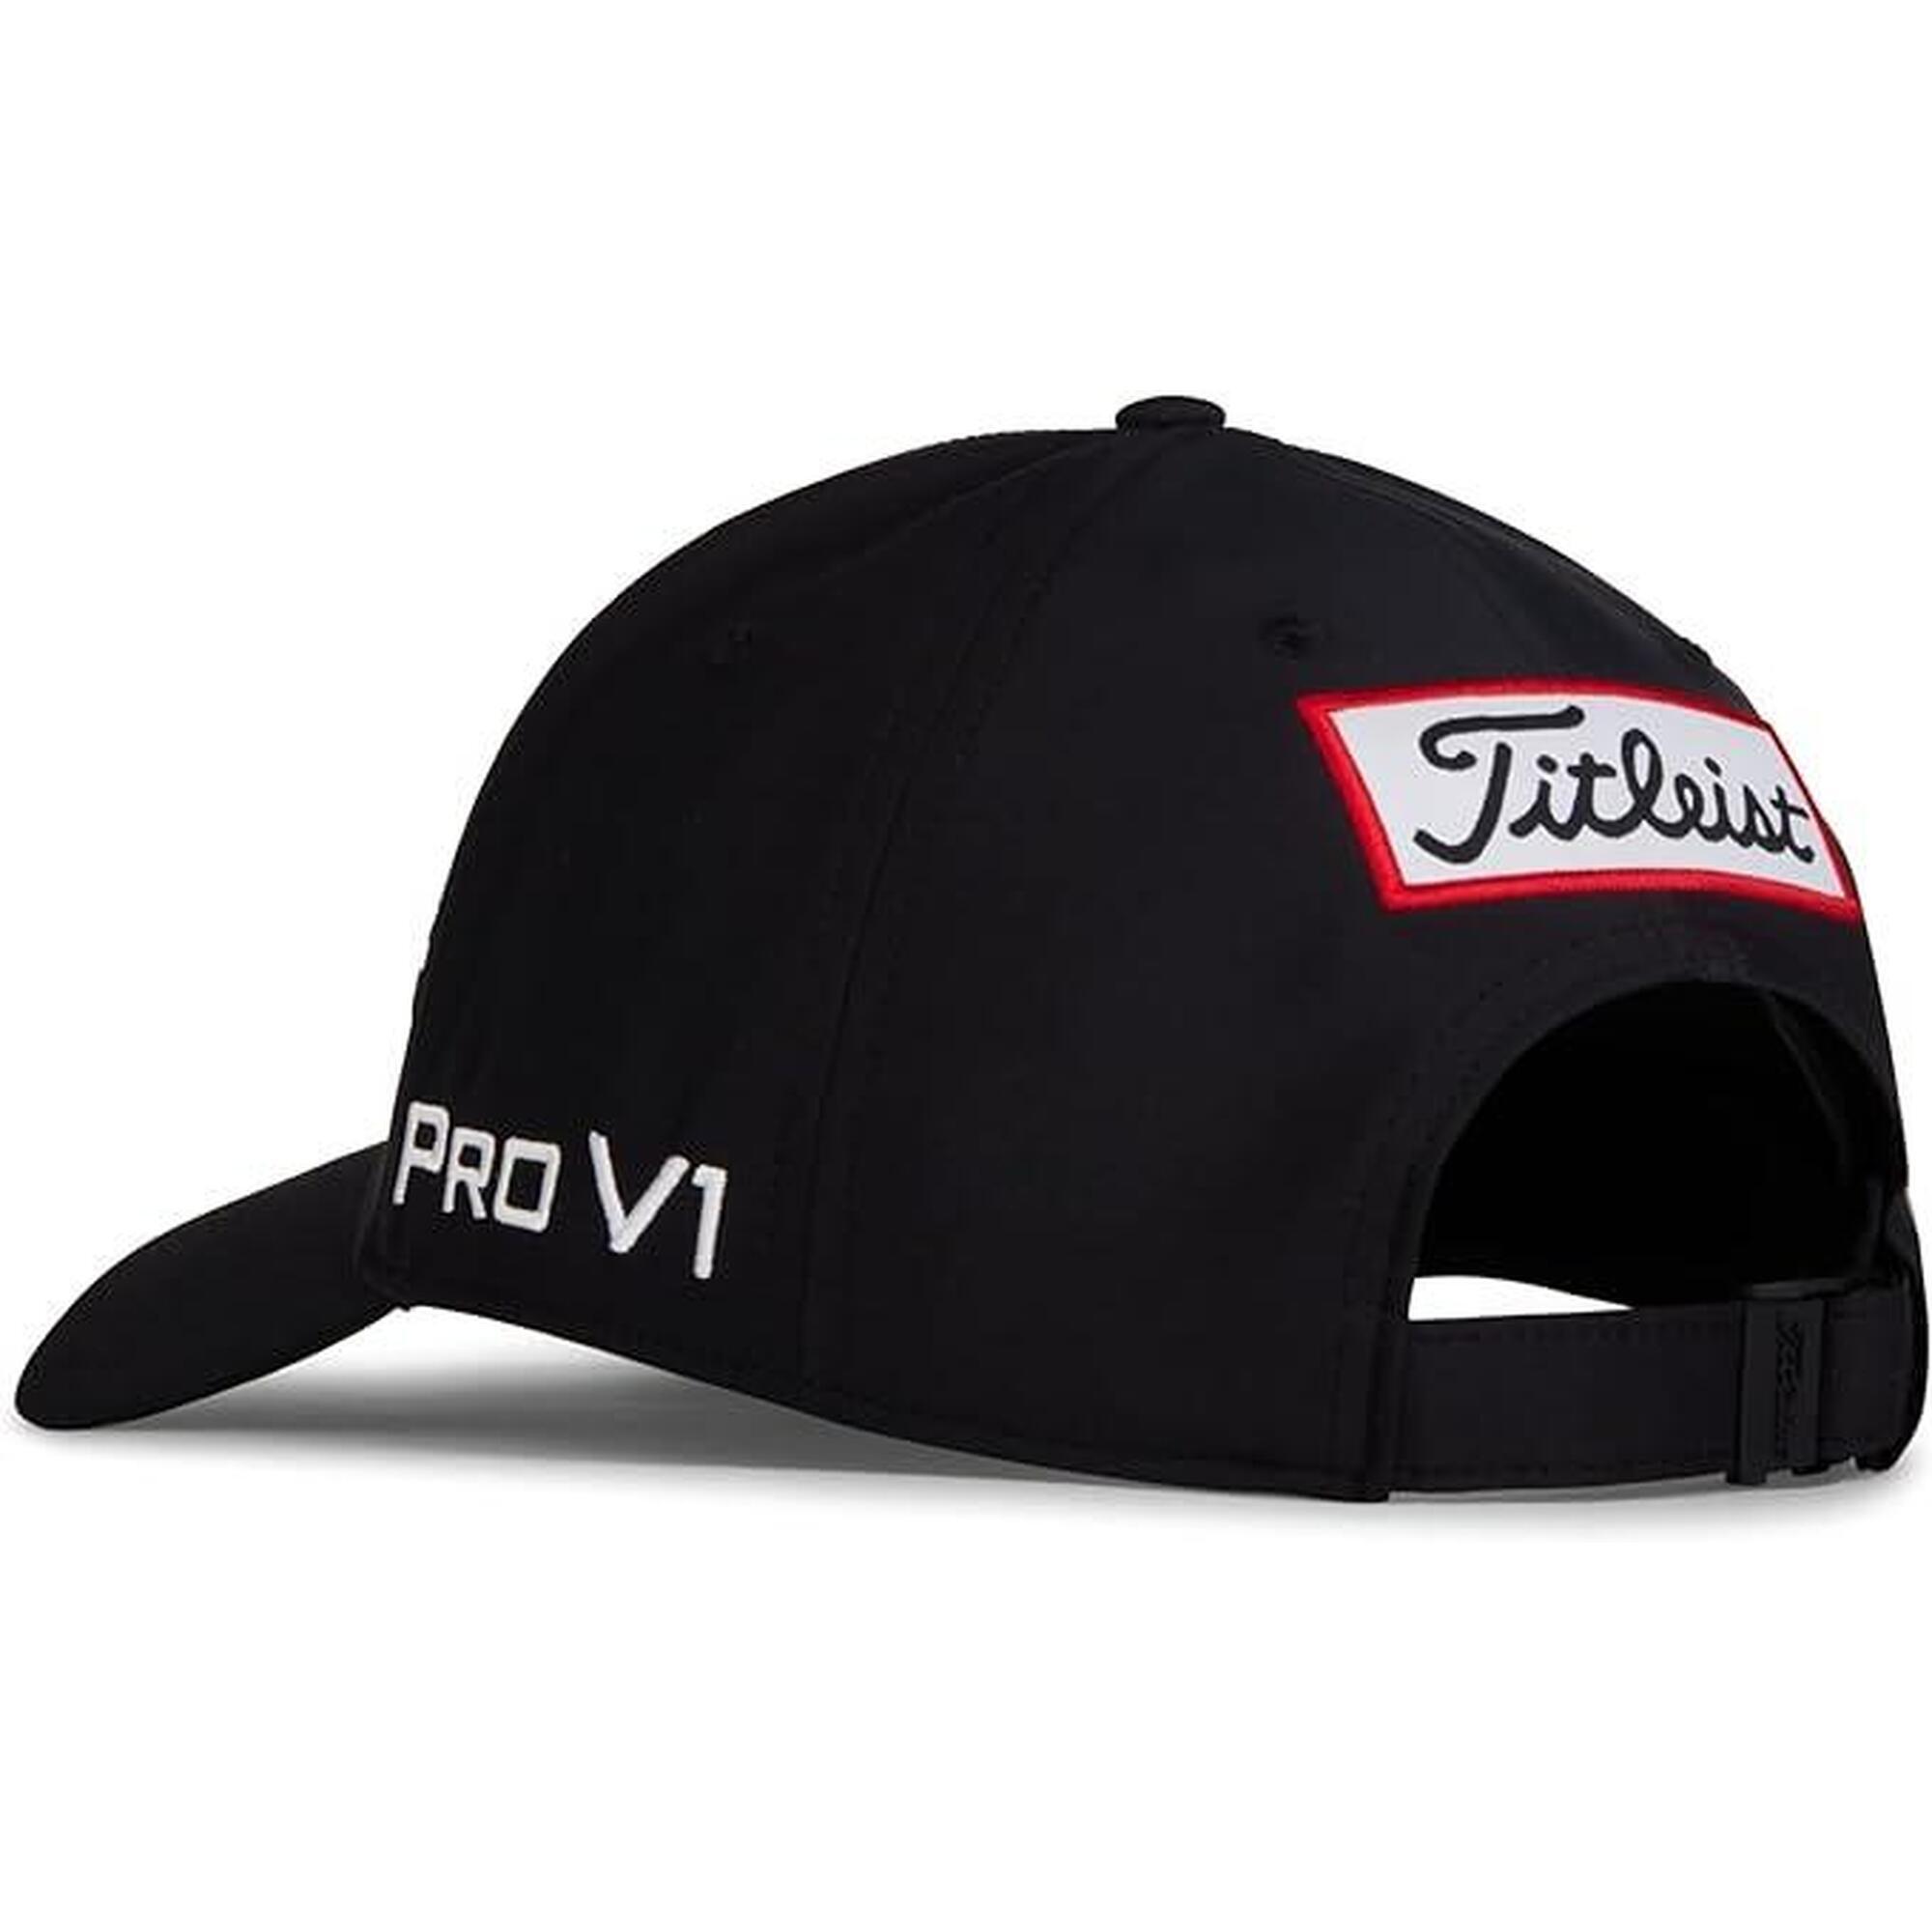 TH22ATPGC-01 TOUR PERFORMANCE 中性超輕可調整式高爾夫球帽 - 黑色